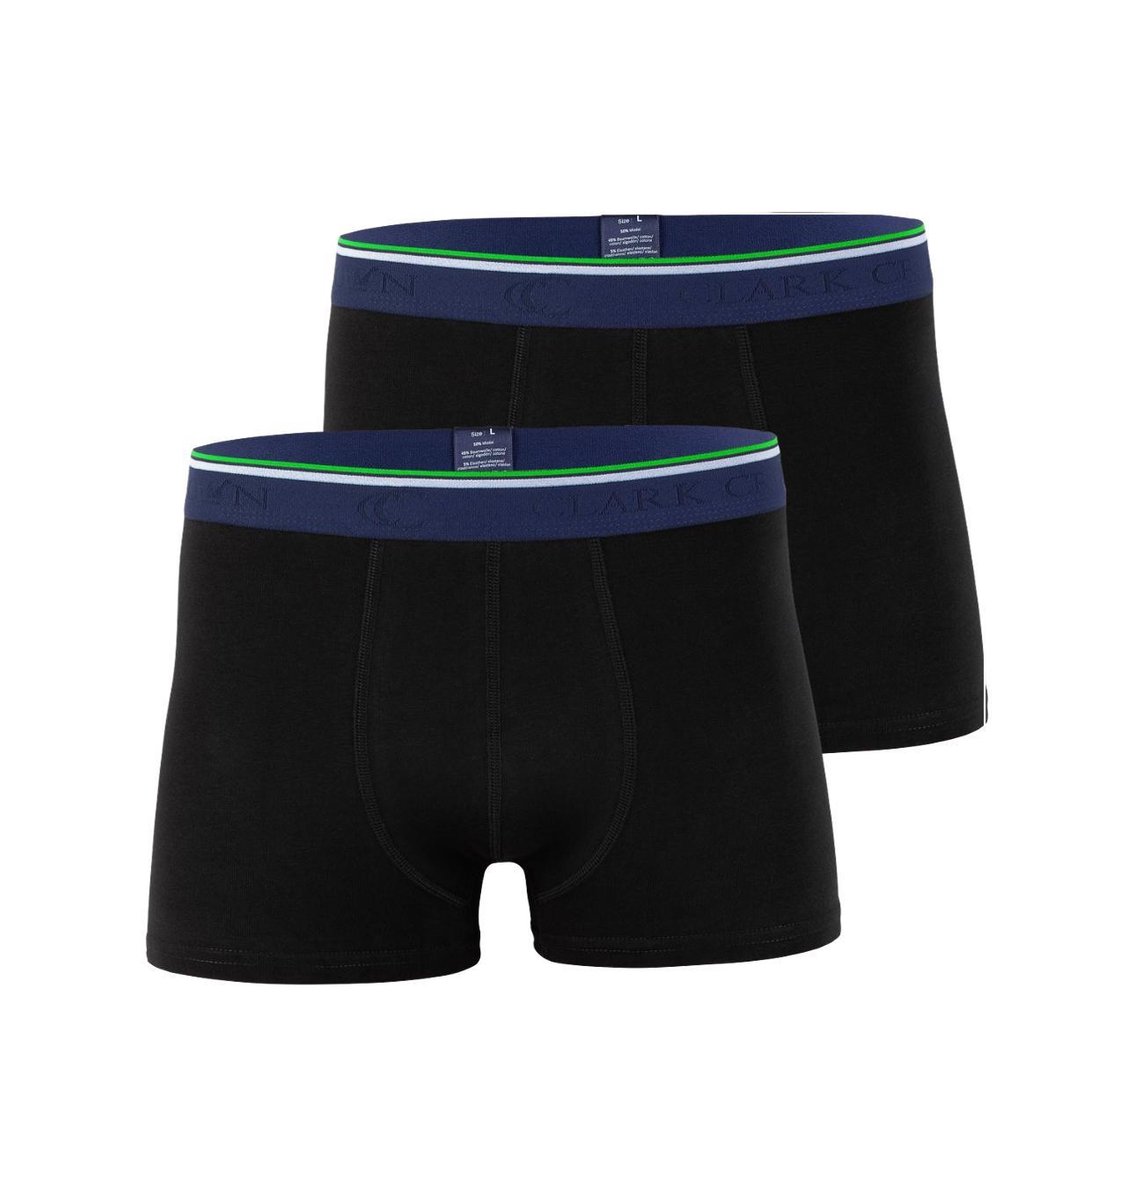 CLARK CROWN BAMBOE Boxershorts 2x zwart individuele verpakking maat XL